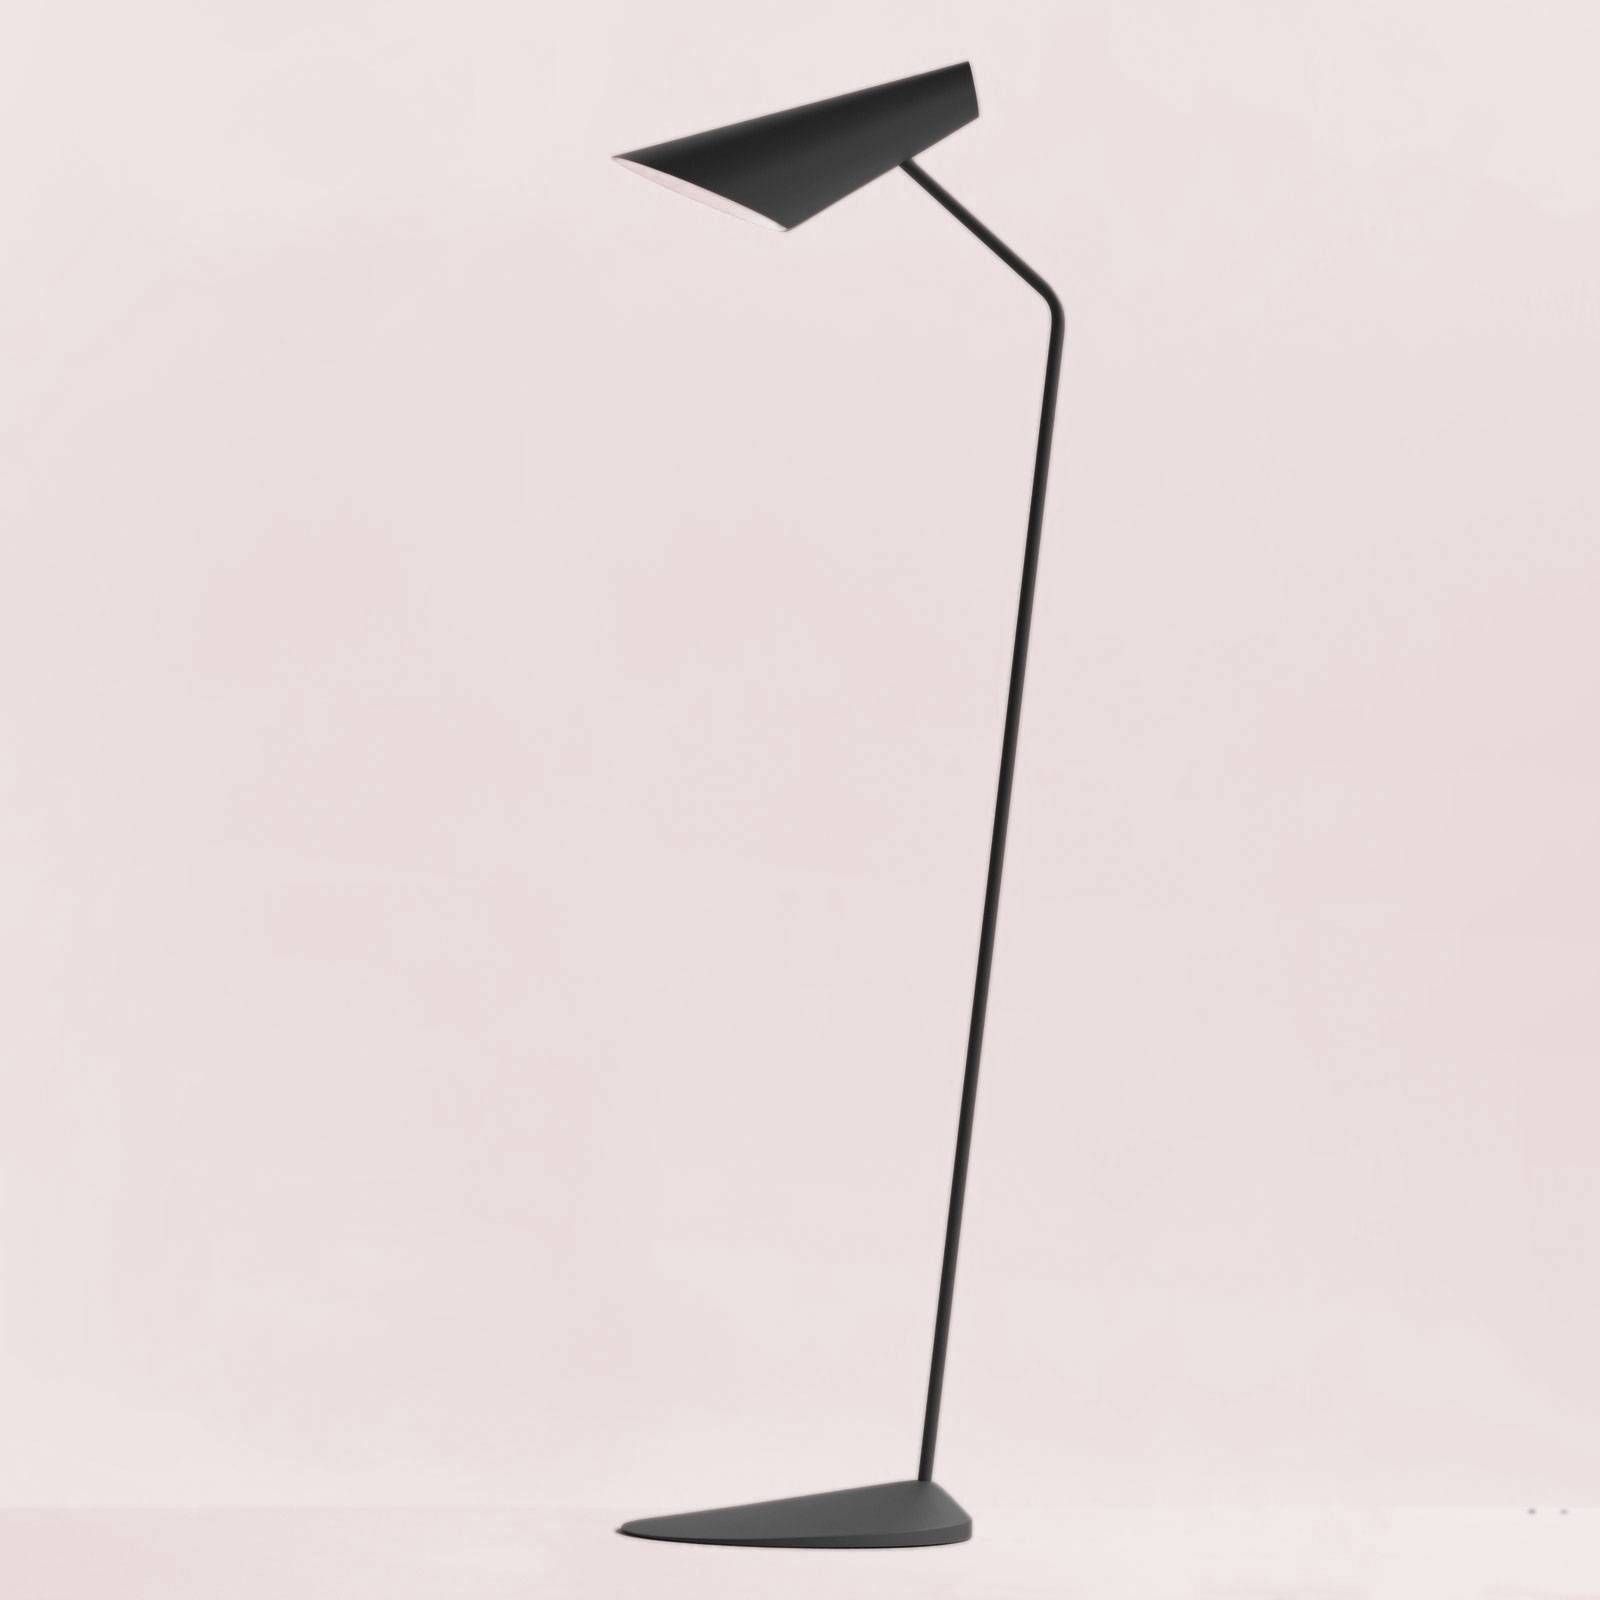 Vibia I.Cono 0712 dizajnérska stojaca lampa, sivá, Obývacia izba / jedáleň, oceľ, polykarbonát, zamak, E14, 6W, K: 127cm